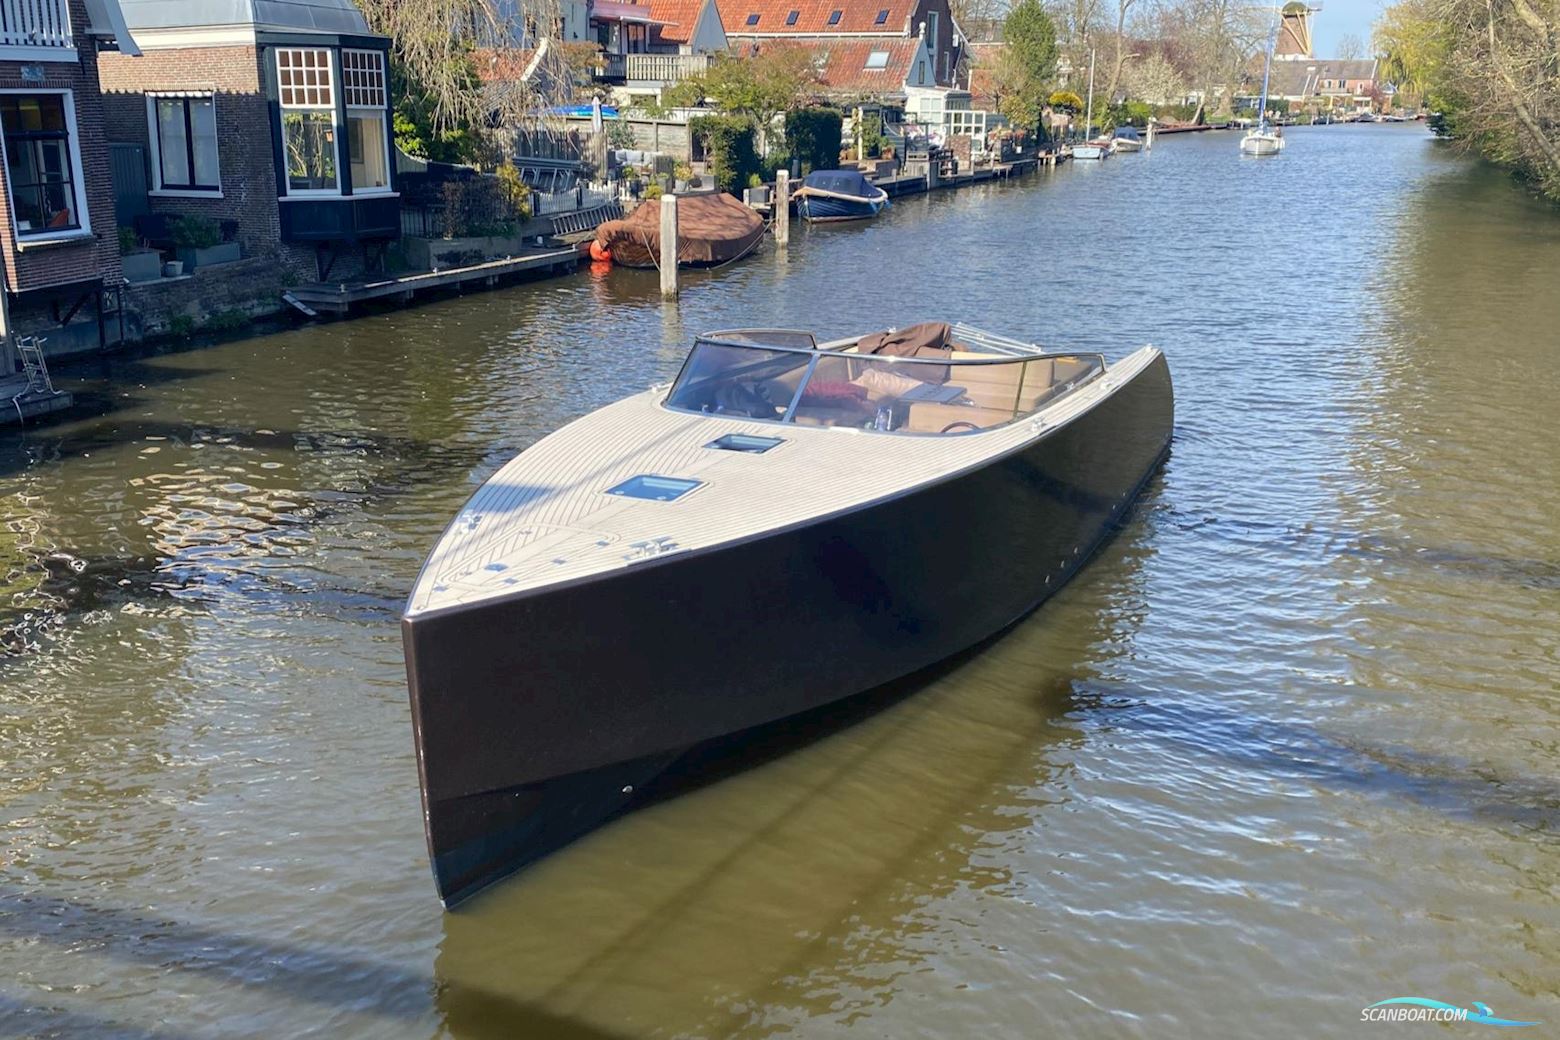 Vandutch 40 Motorbåd 2009, med 2x Yanmar BY 260 motor, Holland